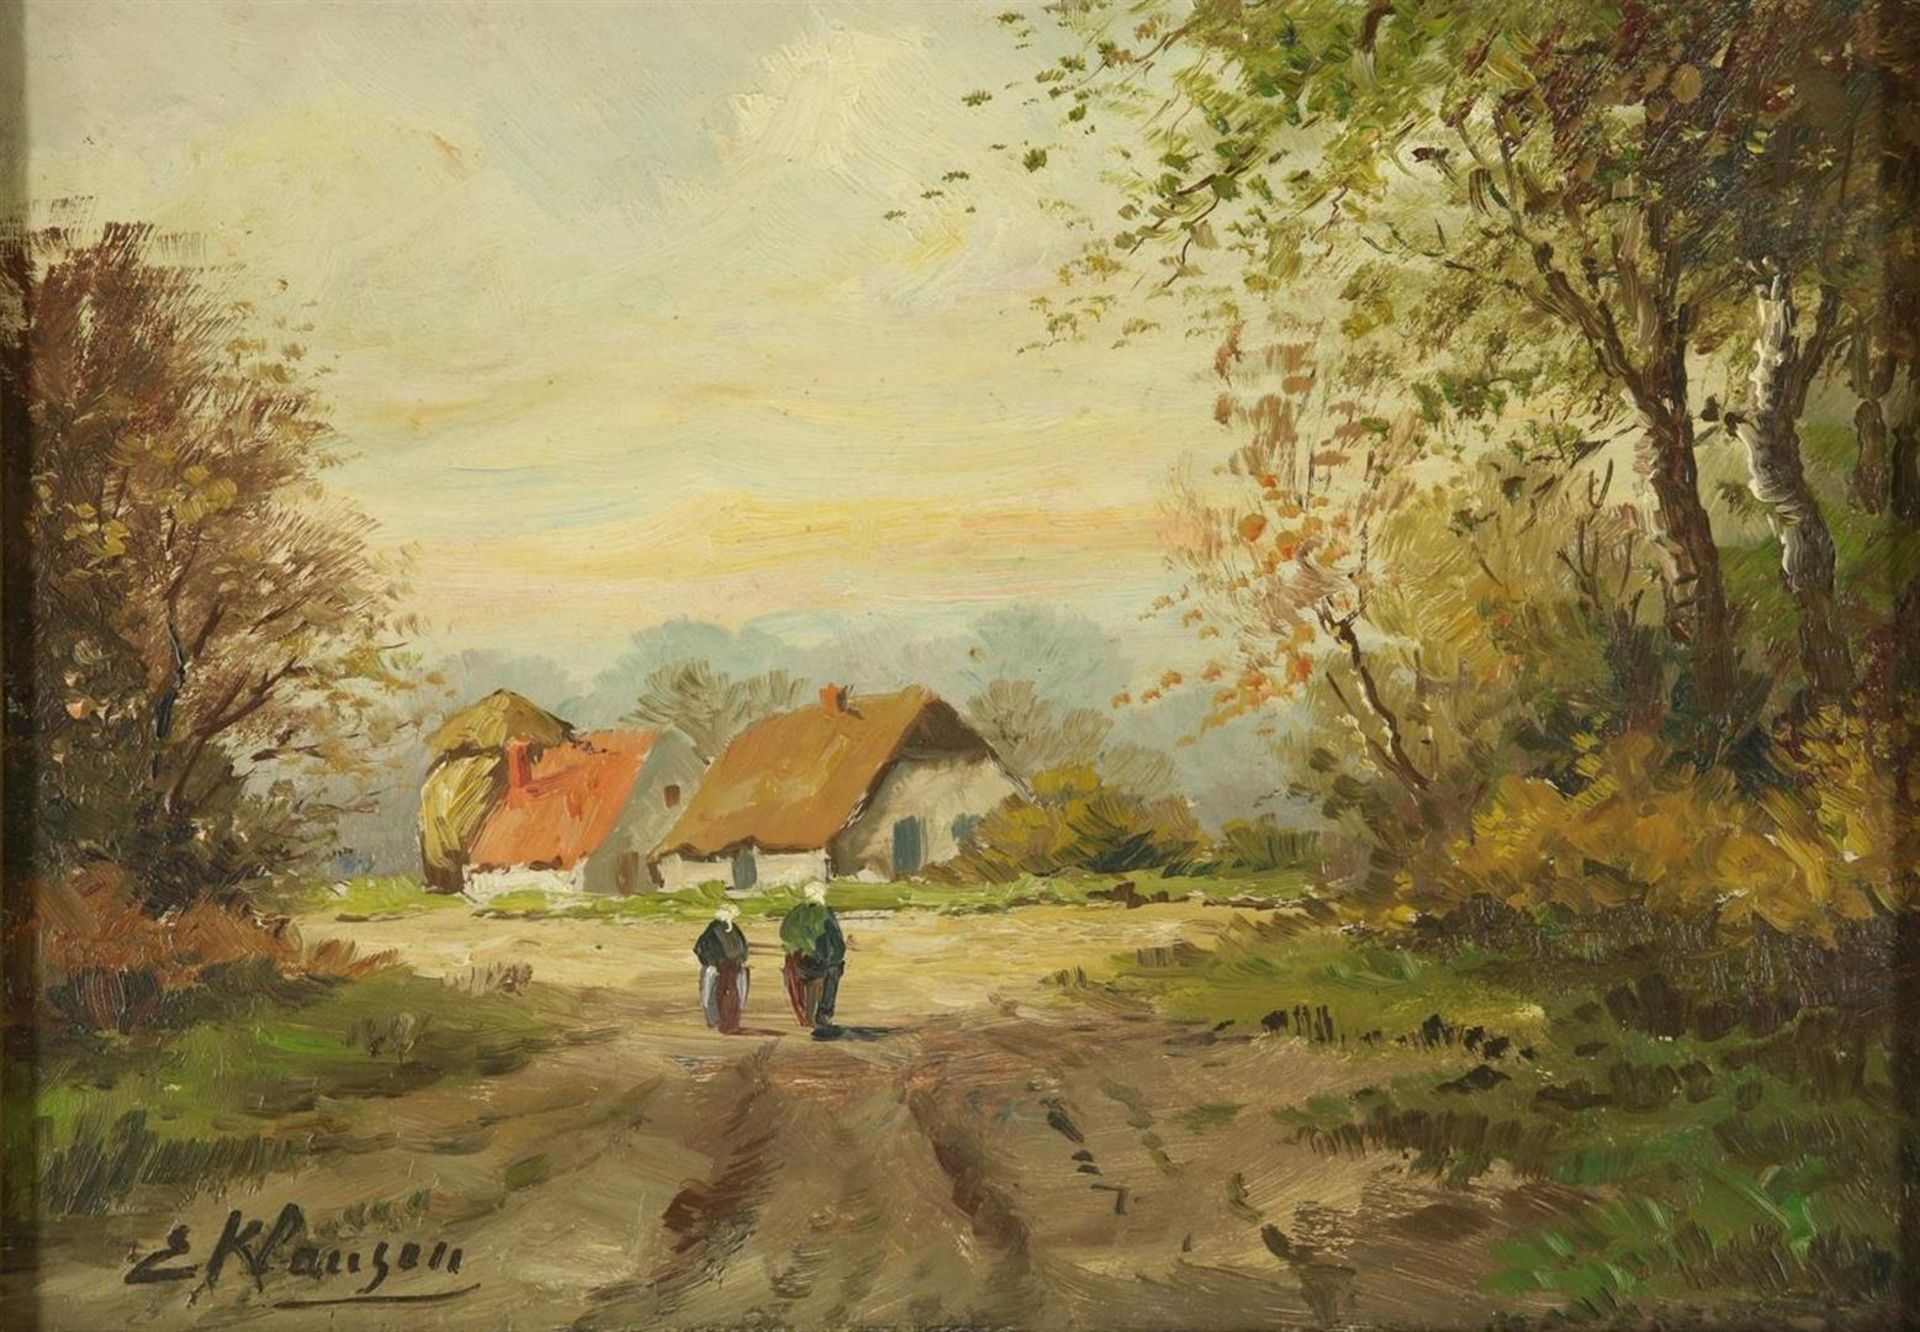 Landscape with figures, signed lower left E. Klaassen, Twente painter, approx 1930, oil on